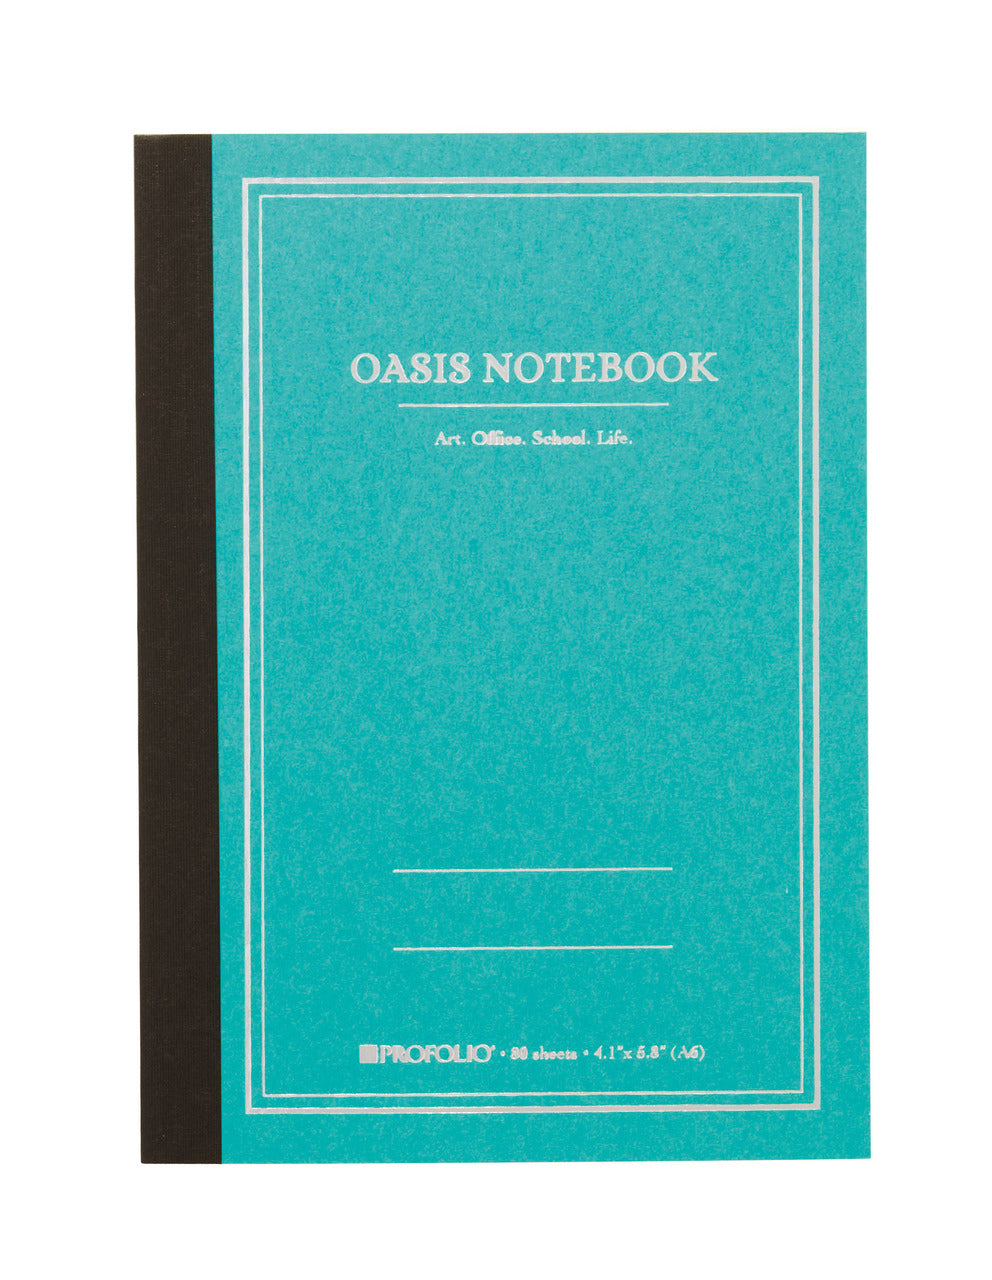 ProFolio Oasis Notebook in wintergreen.